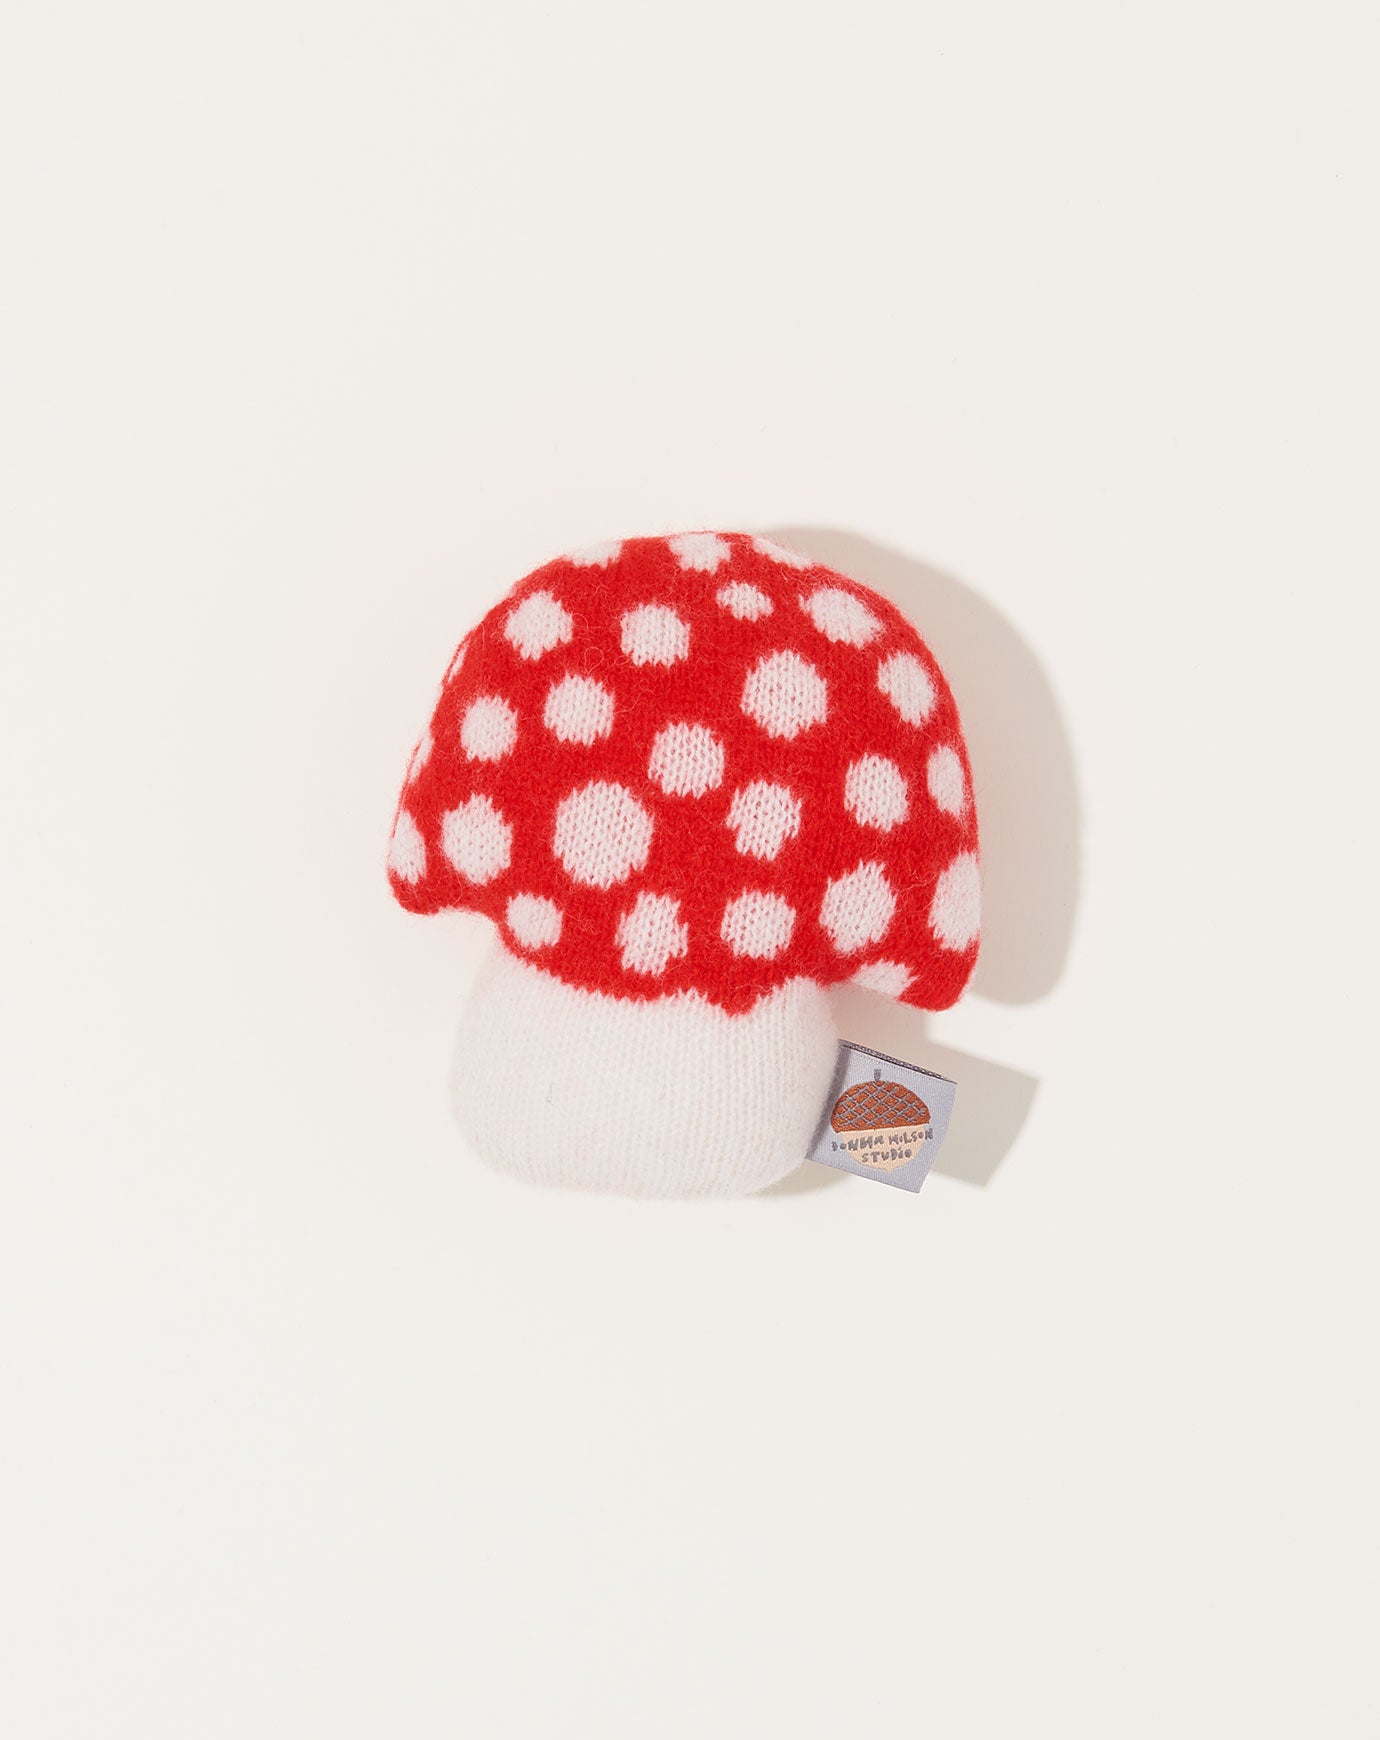 Donna Wilson Red Mushroom Mini Cushion